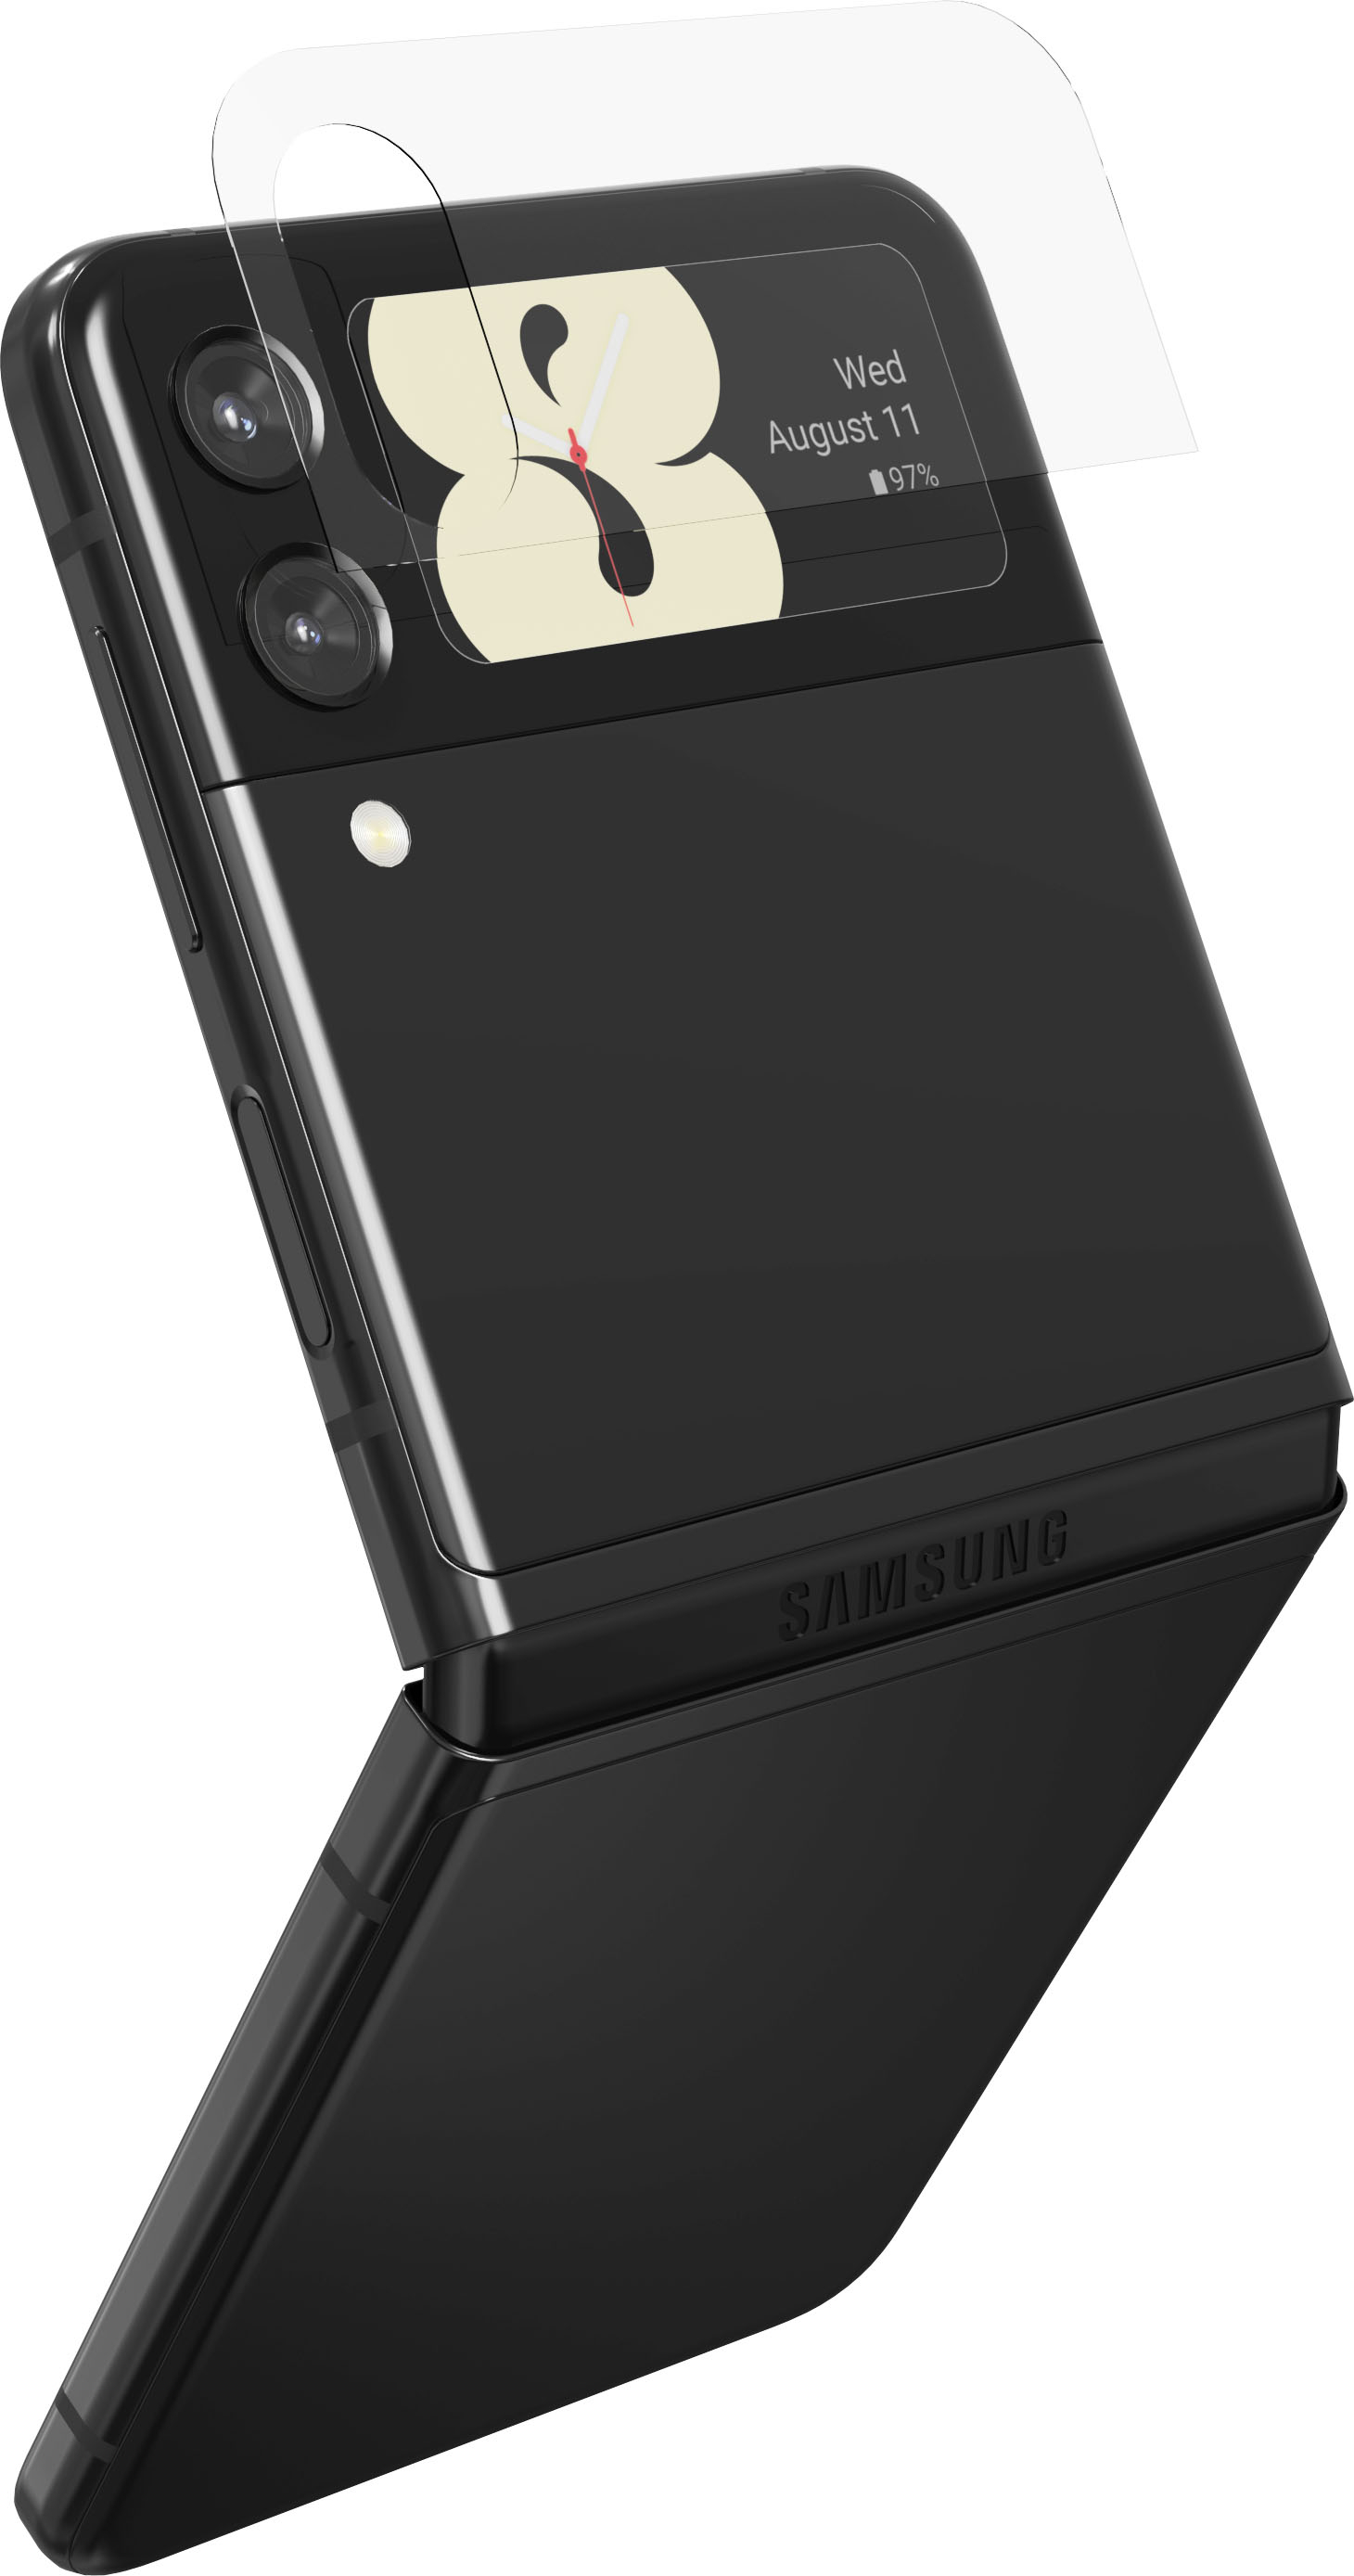 Angle View: Samsung - Geek Squad Certified Refurbished Galaxy Z Flip 256GB (Unlocked) - Mirror Black